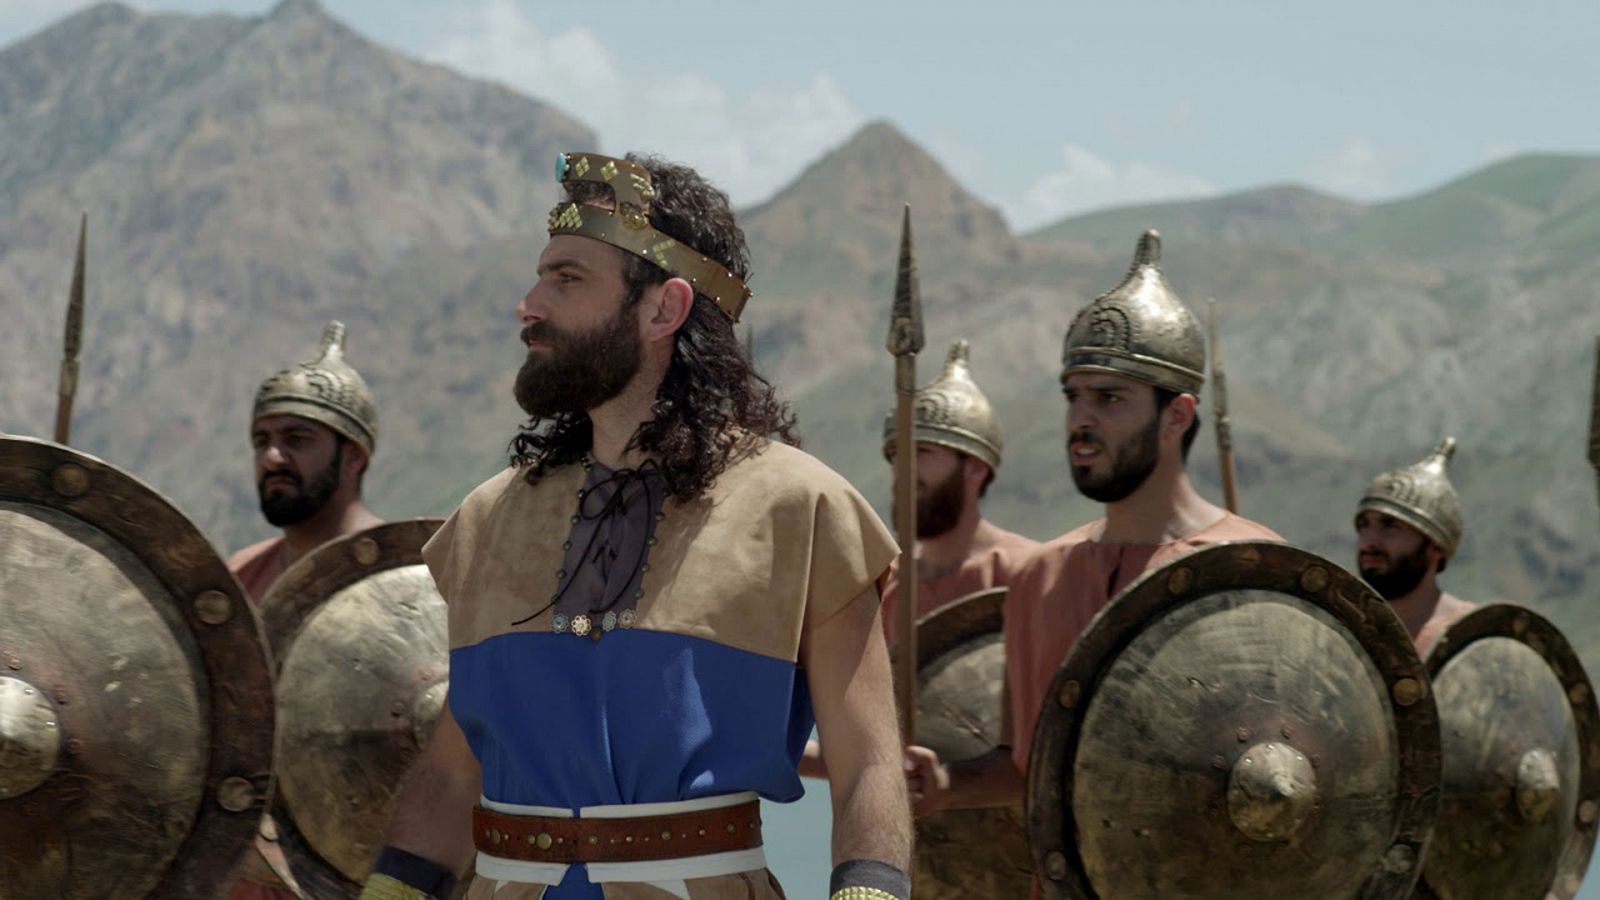 Somos documentales - Urartu: el reino olvidado - Documental en RTVE